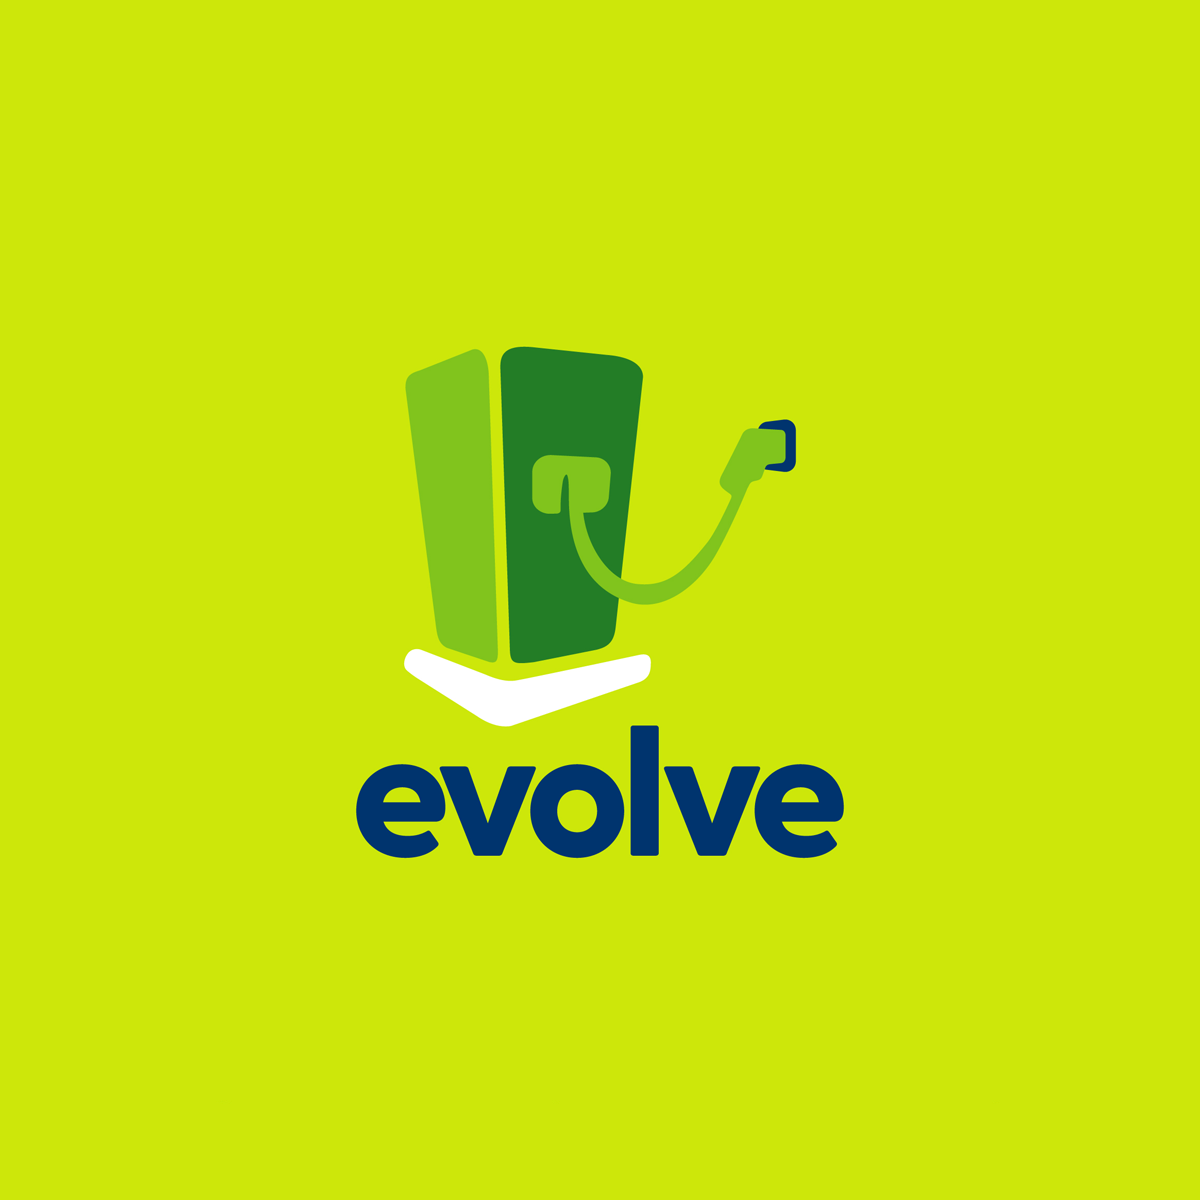 Evolve logo and icon